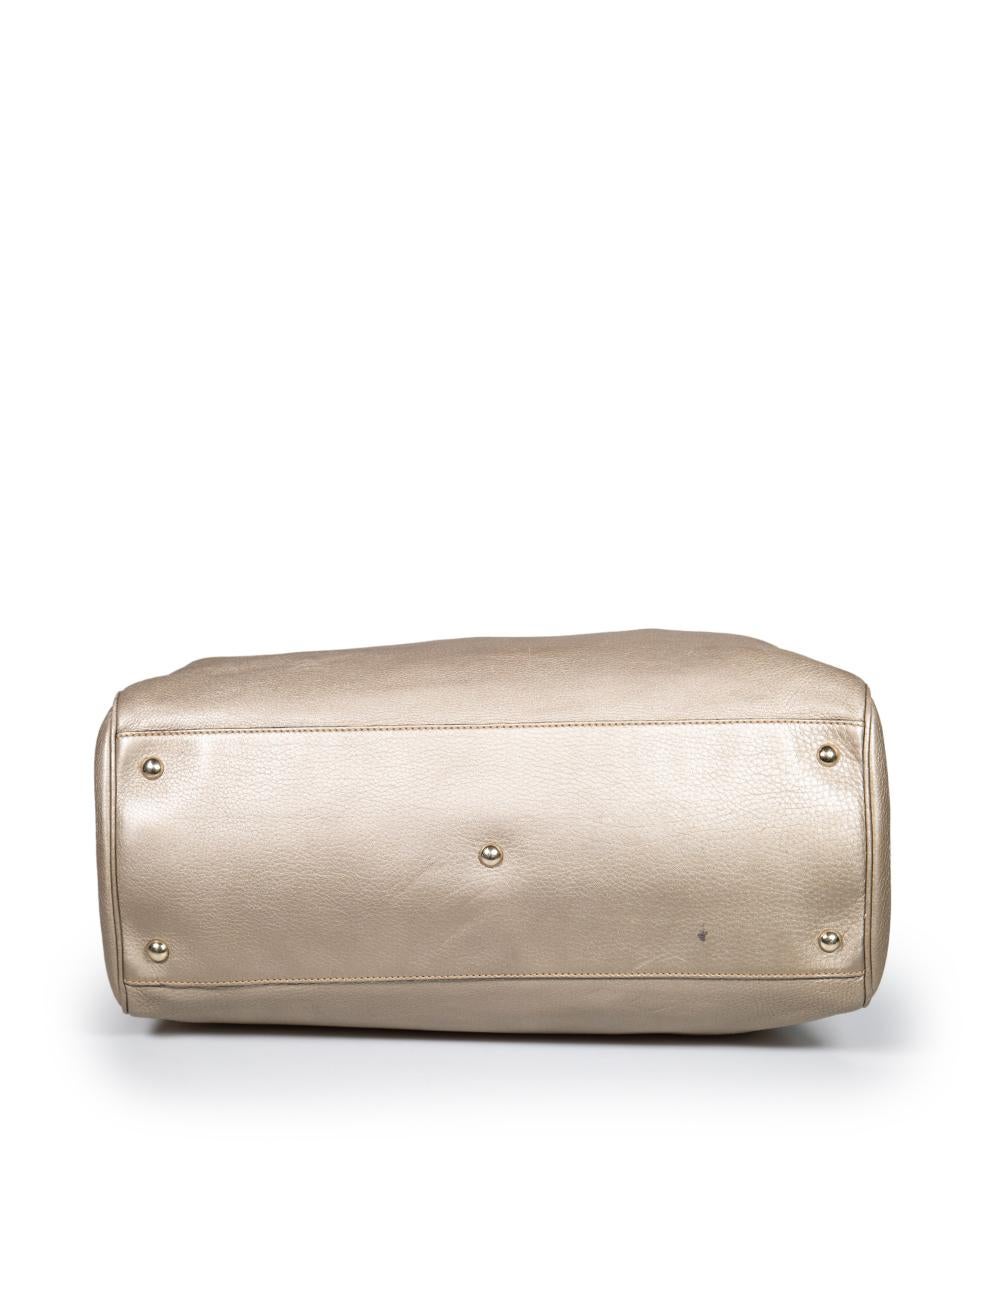 Women's Gucci Taupe Metallic Leather Bamboo Handbag For Sale